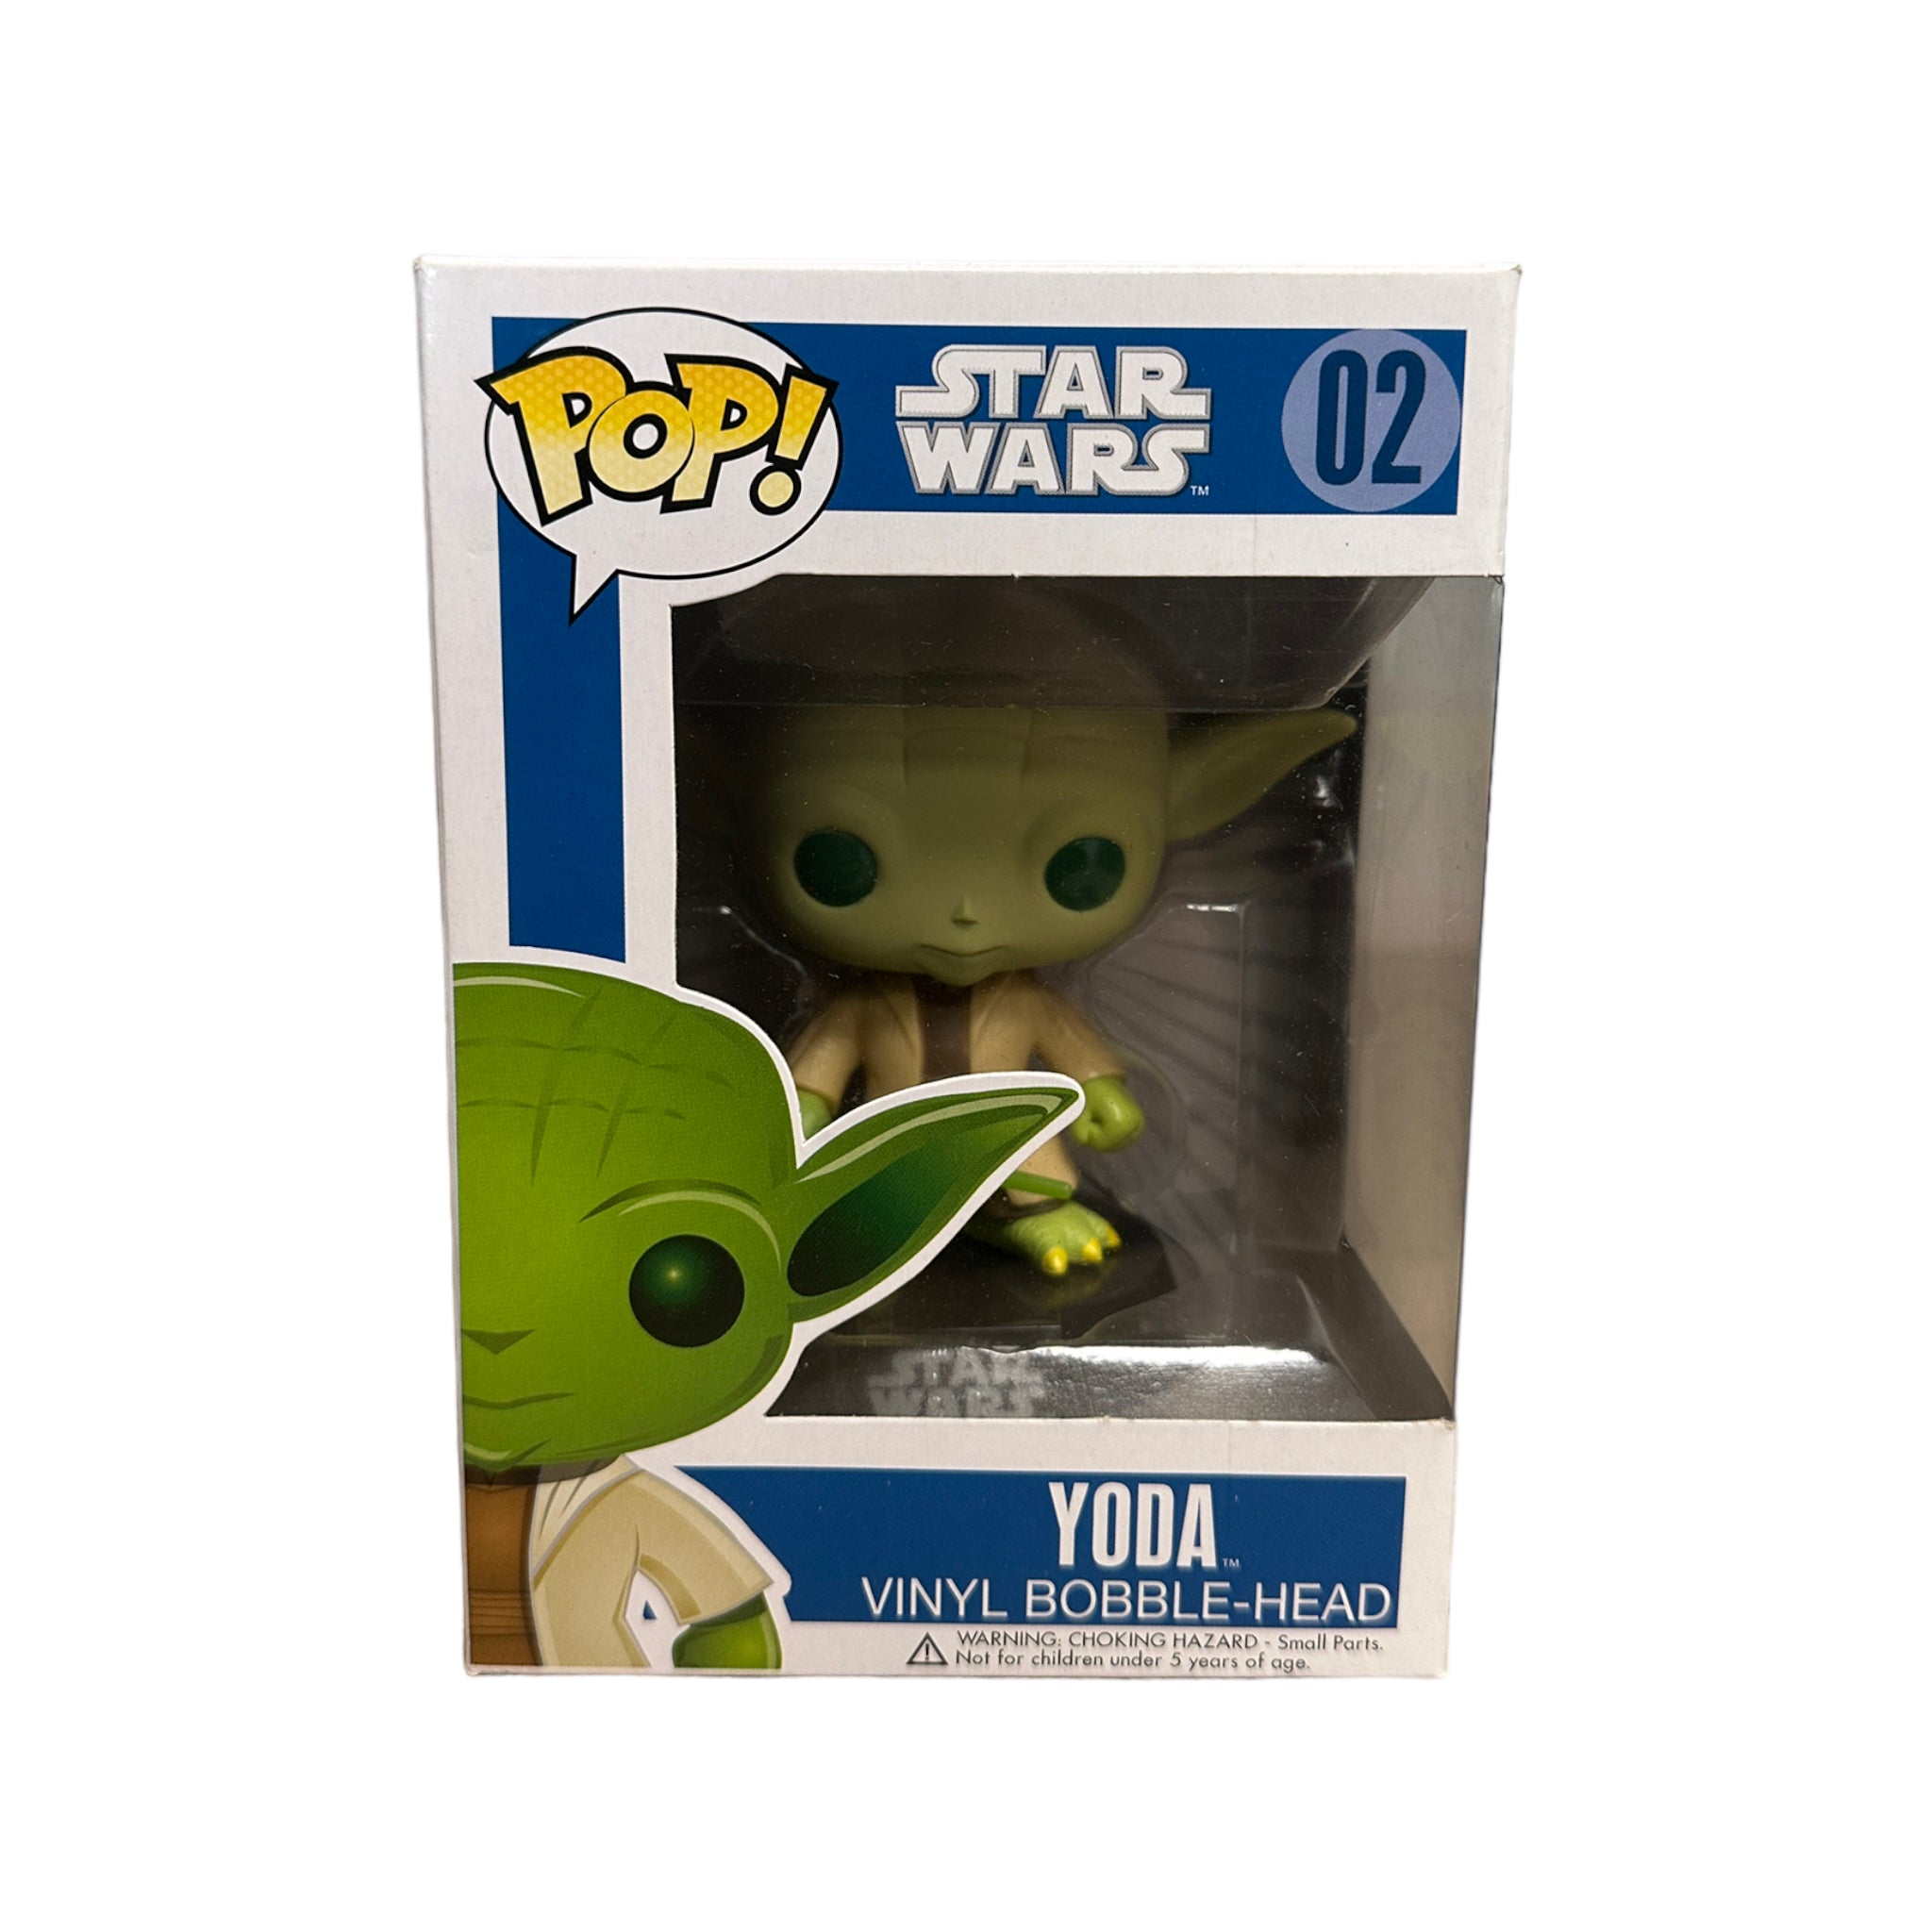 Yoda #02 (Large Writing) Funko Pop! - Star Wars - 2014 Pop! - Condition 7.5/10